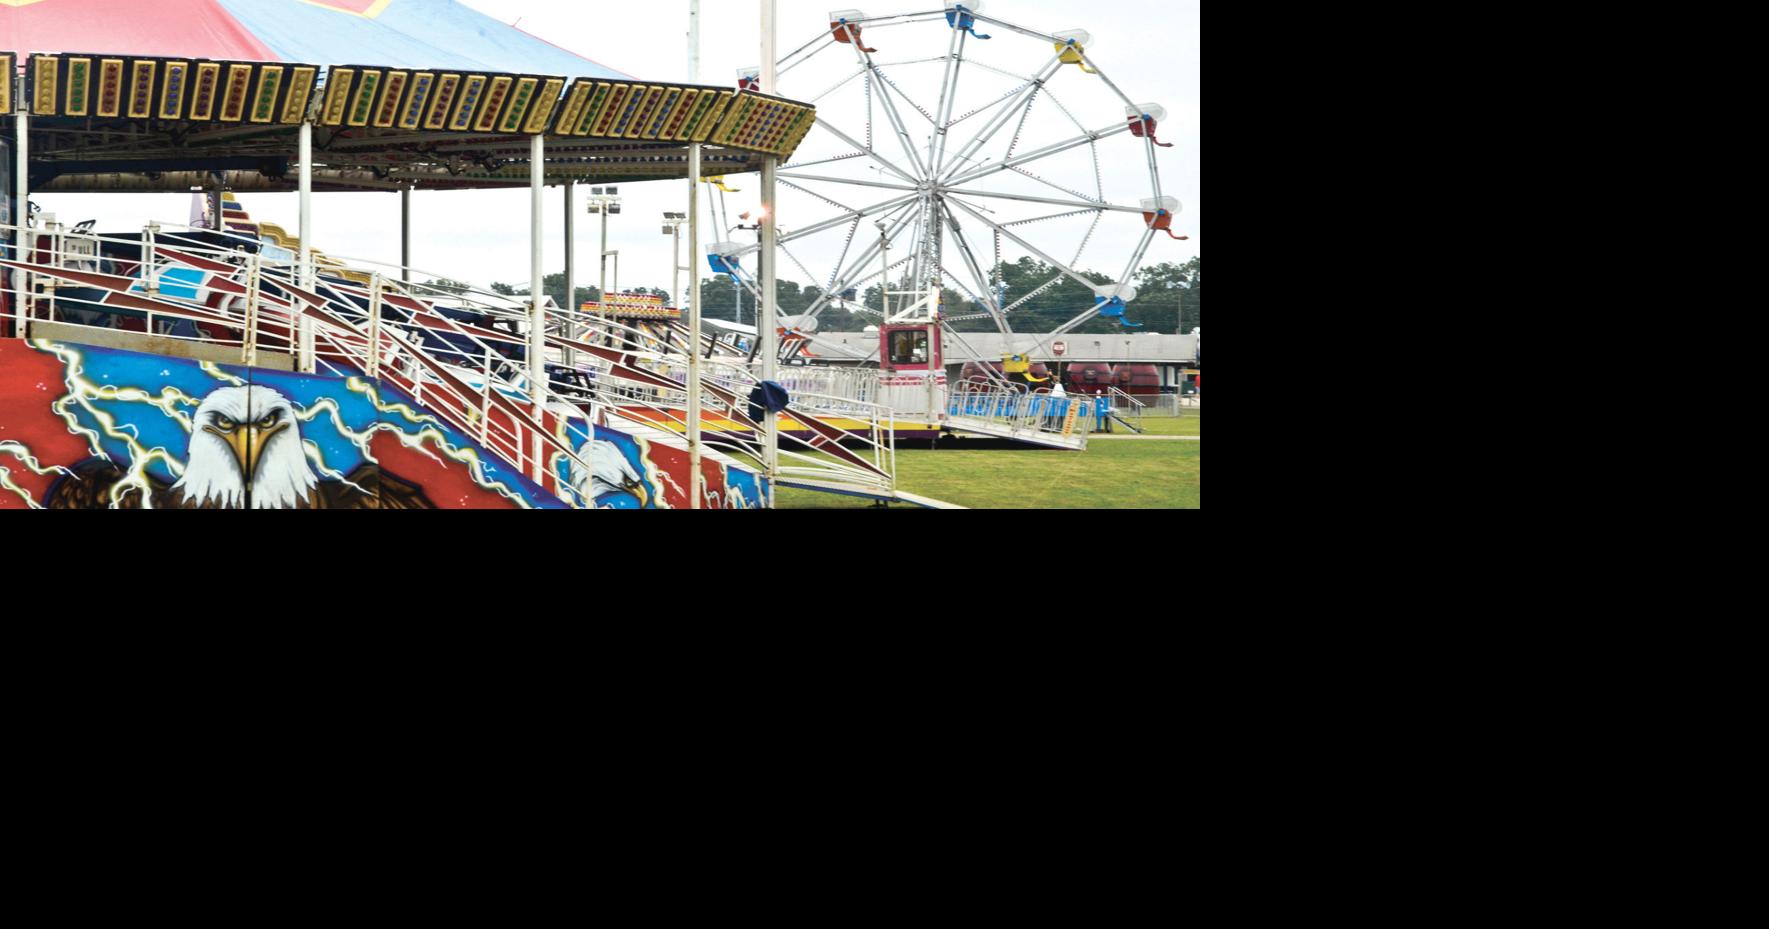 Orangeburg County Fair brings annual tradition of fun, food and games